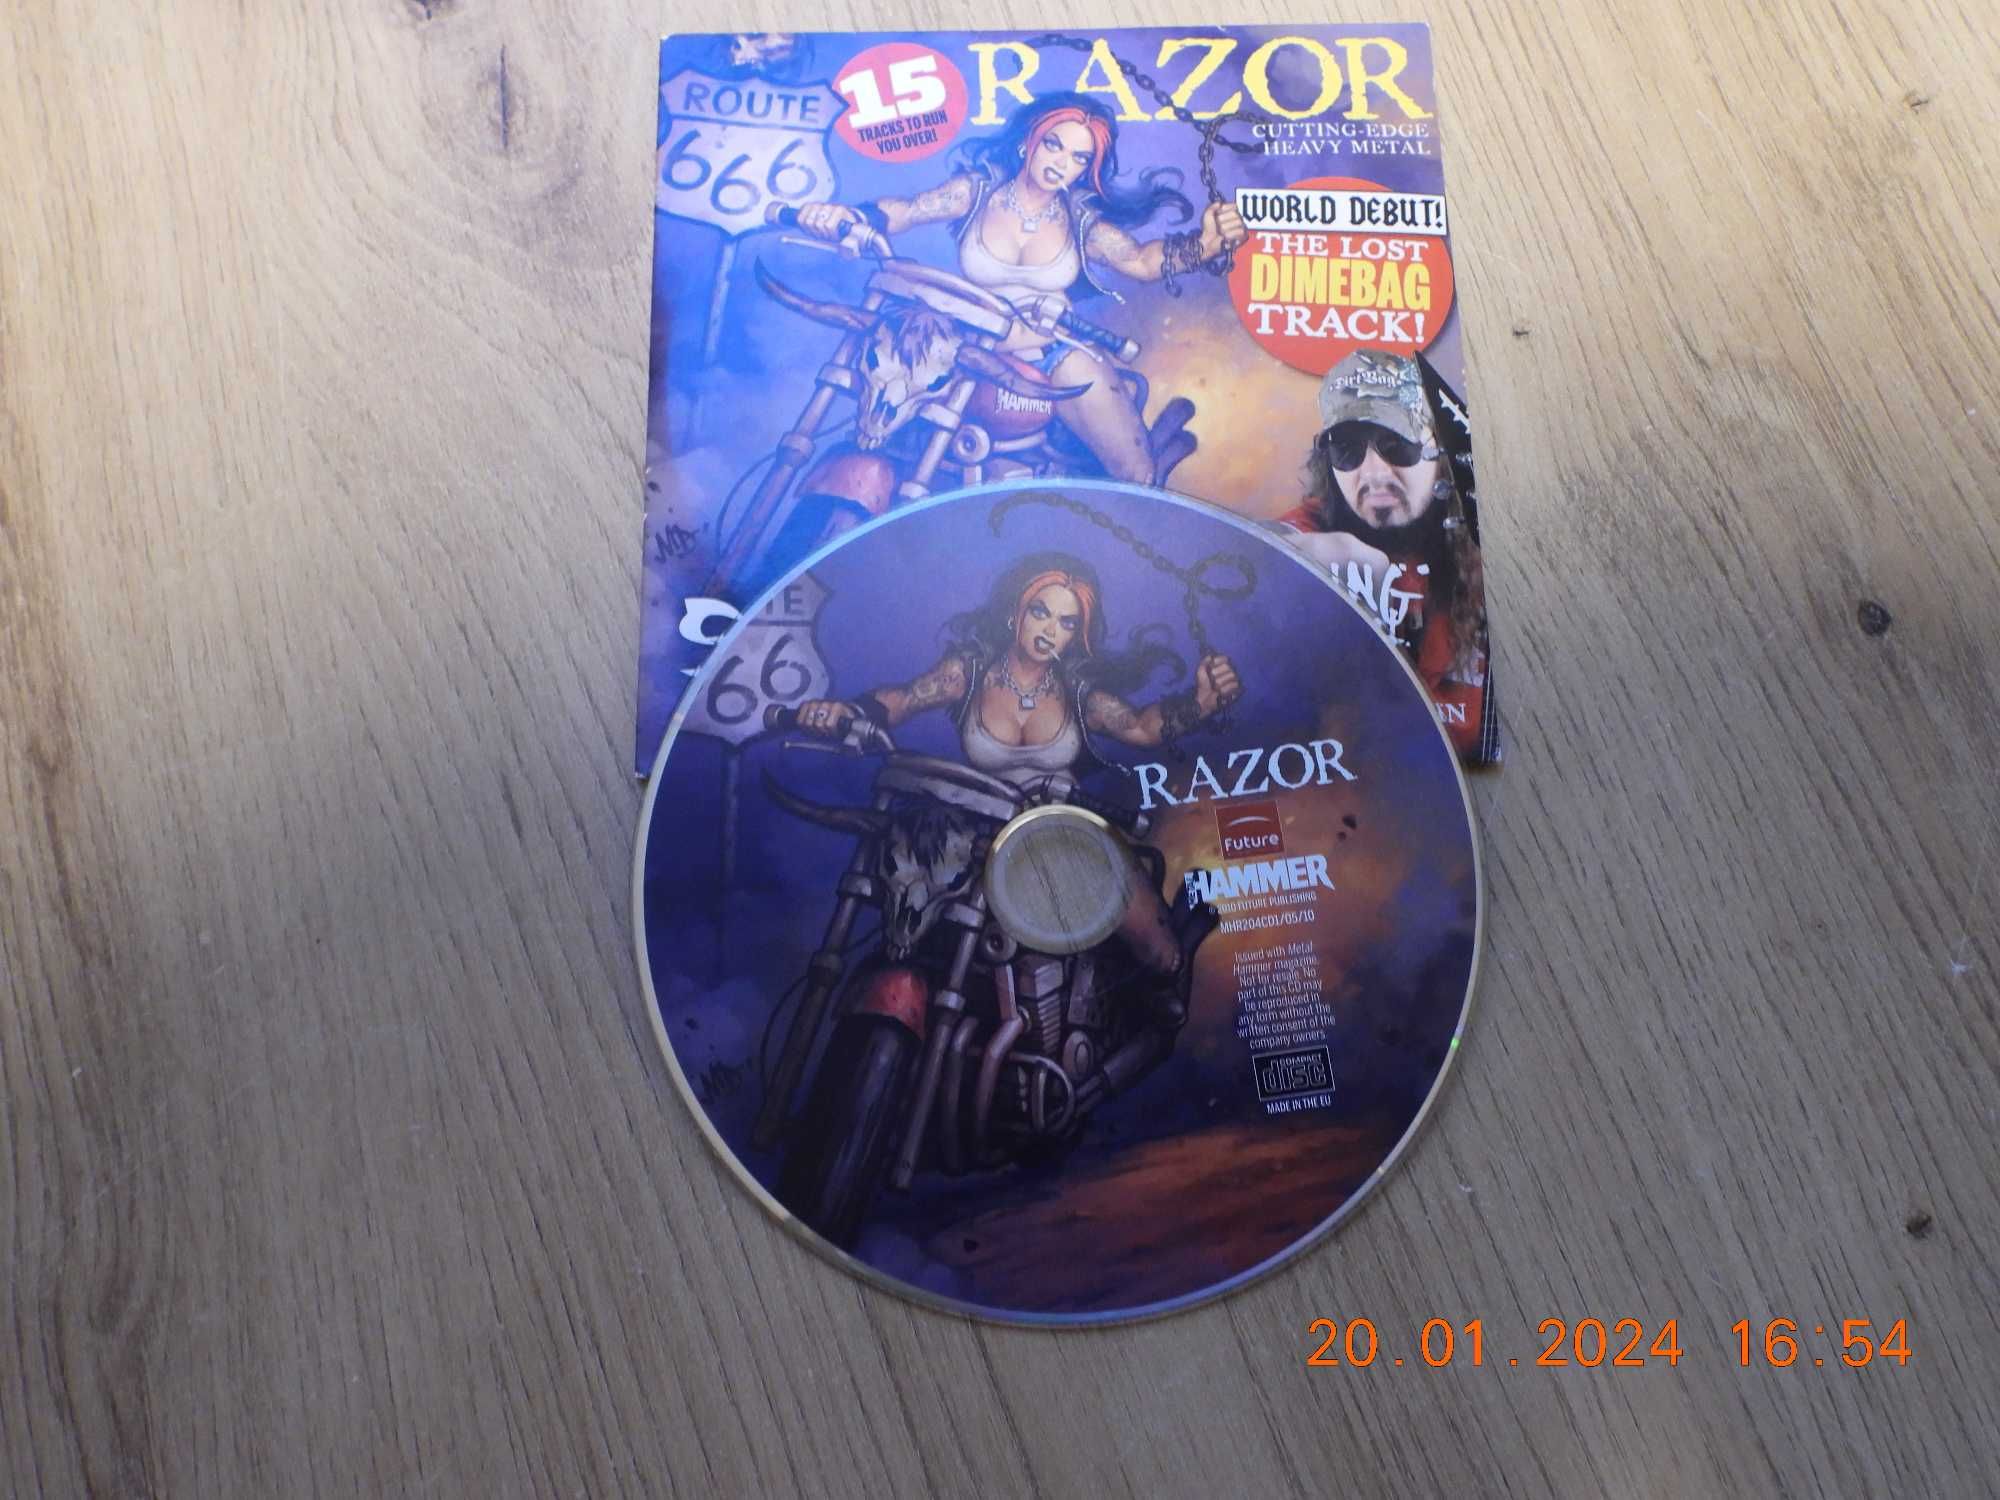 Razor - Issue 204  ( Hammer)   - płyta CD